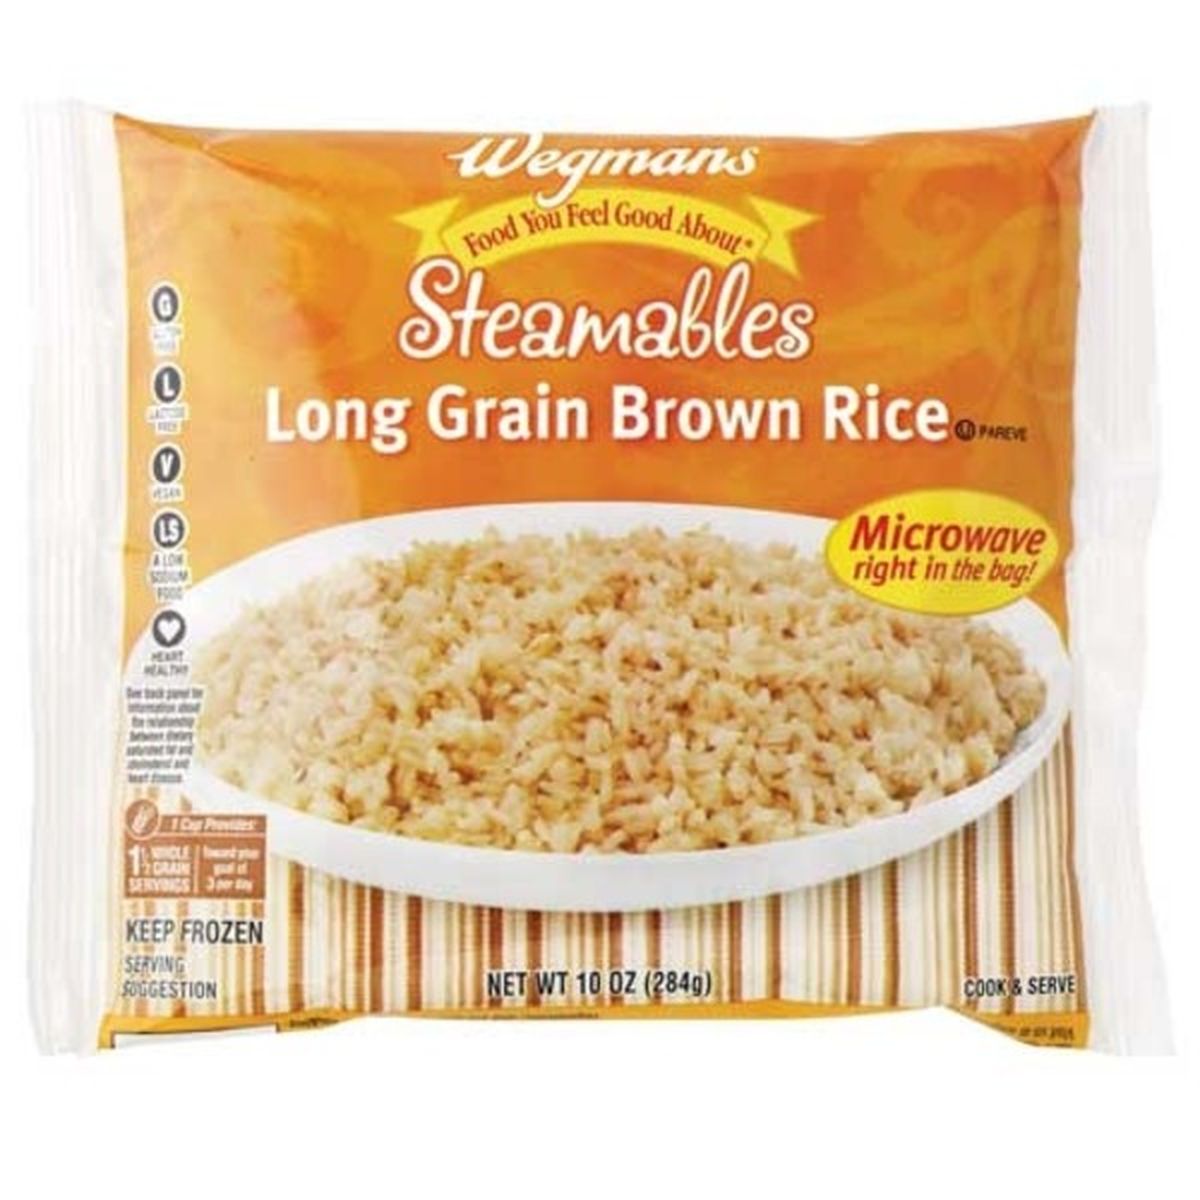 Calories in Wegmans Microwaveable Long Grain Brown Rice